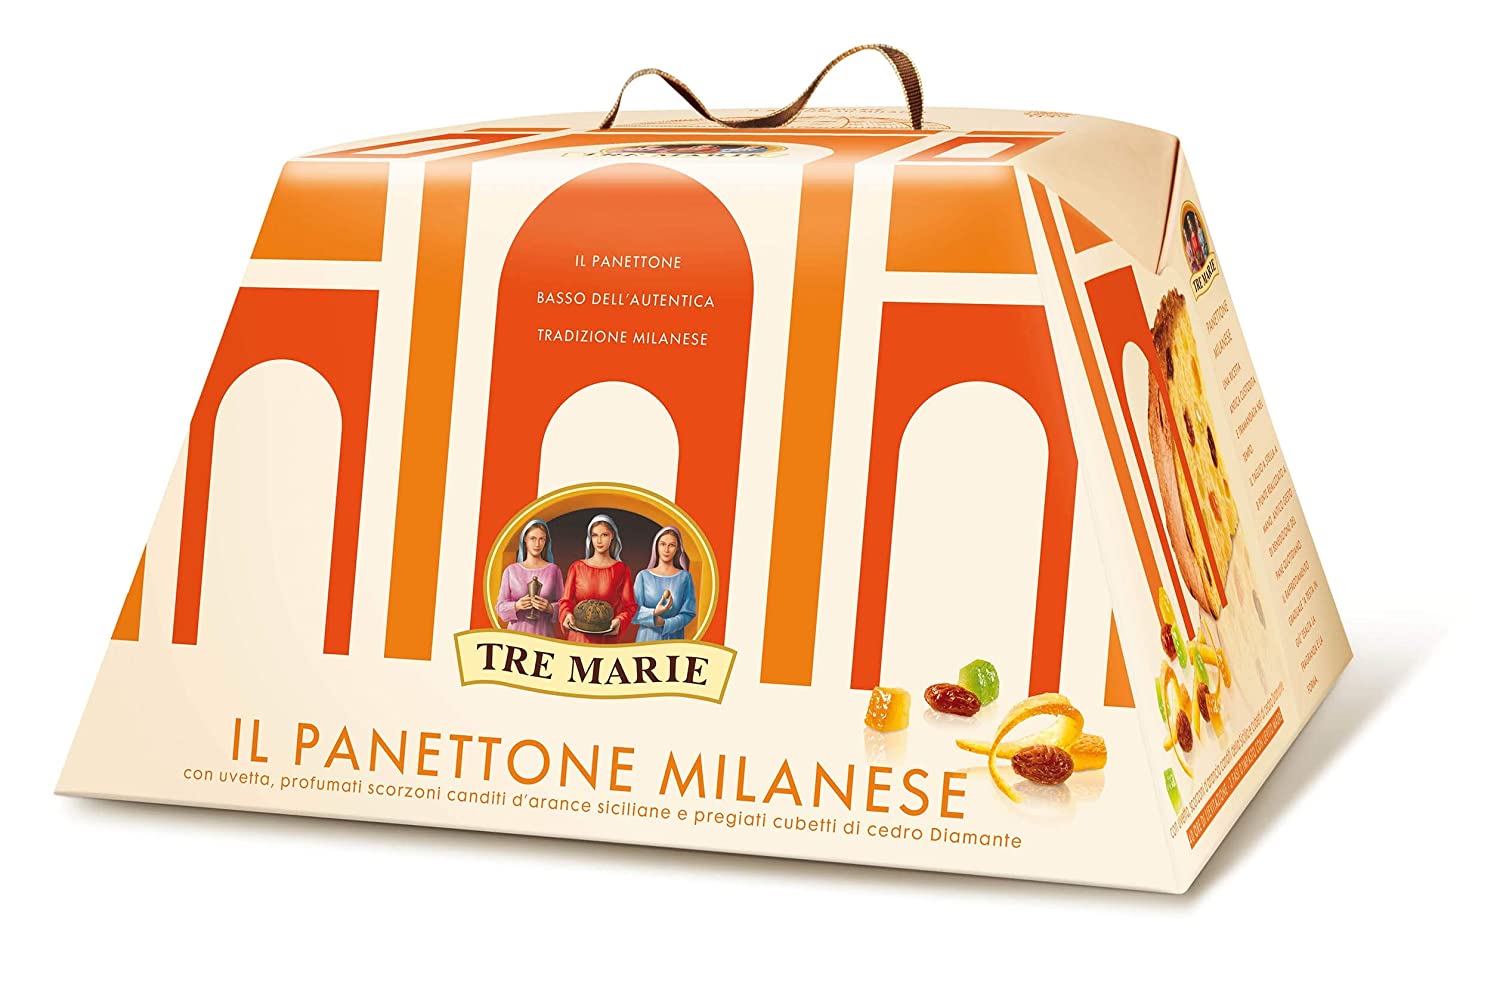 Tre Marie Panettone Milanese 750 g (1 lb 10.5 oz) Traditional Italian Christmas Cake